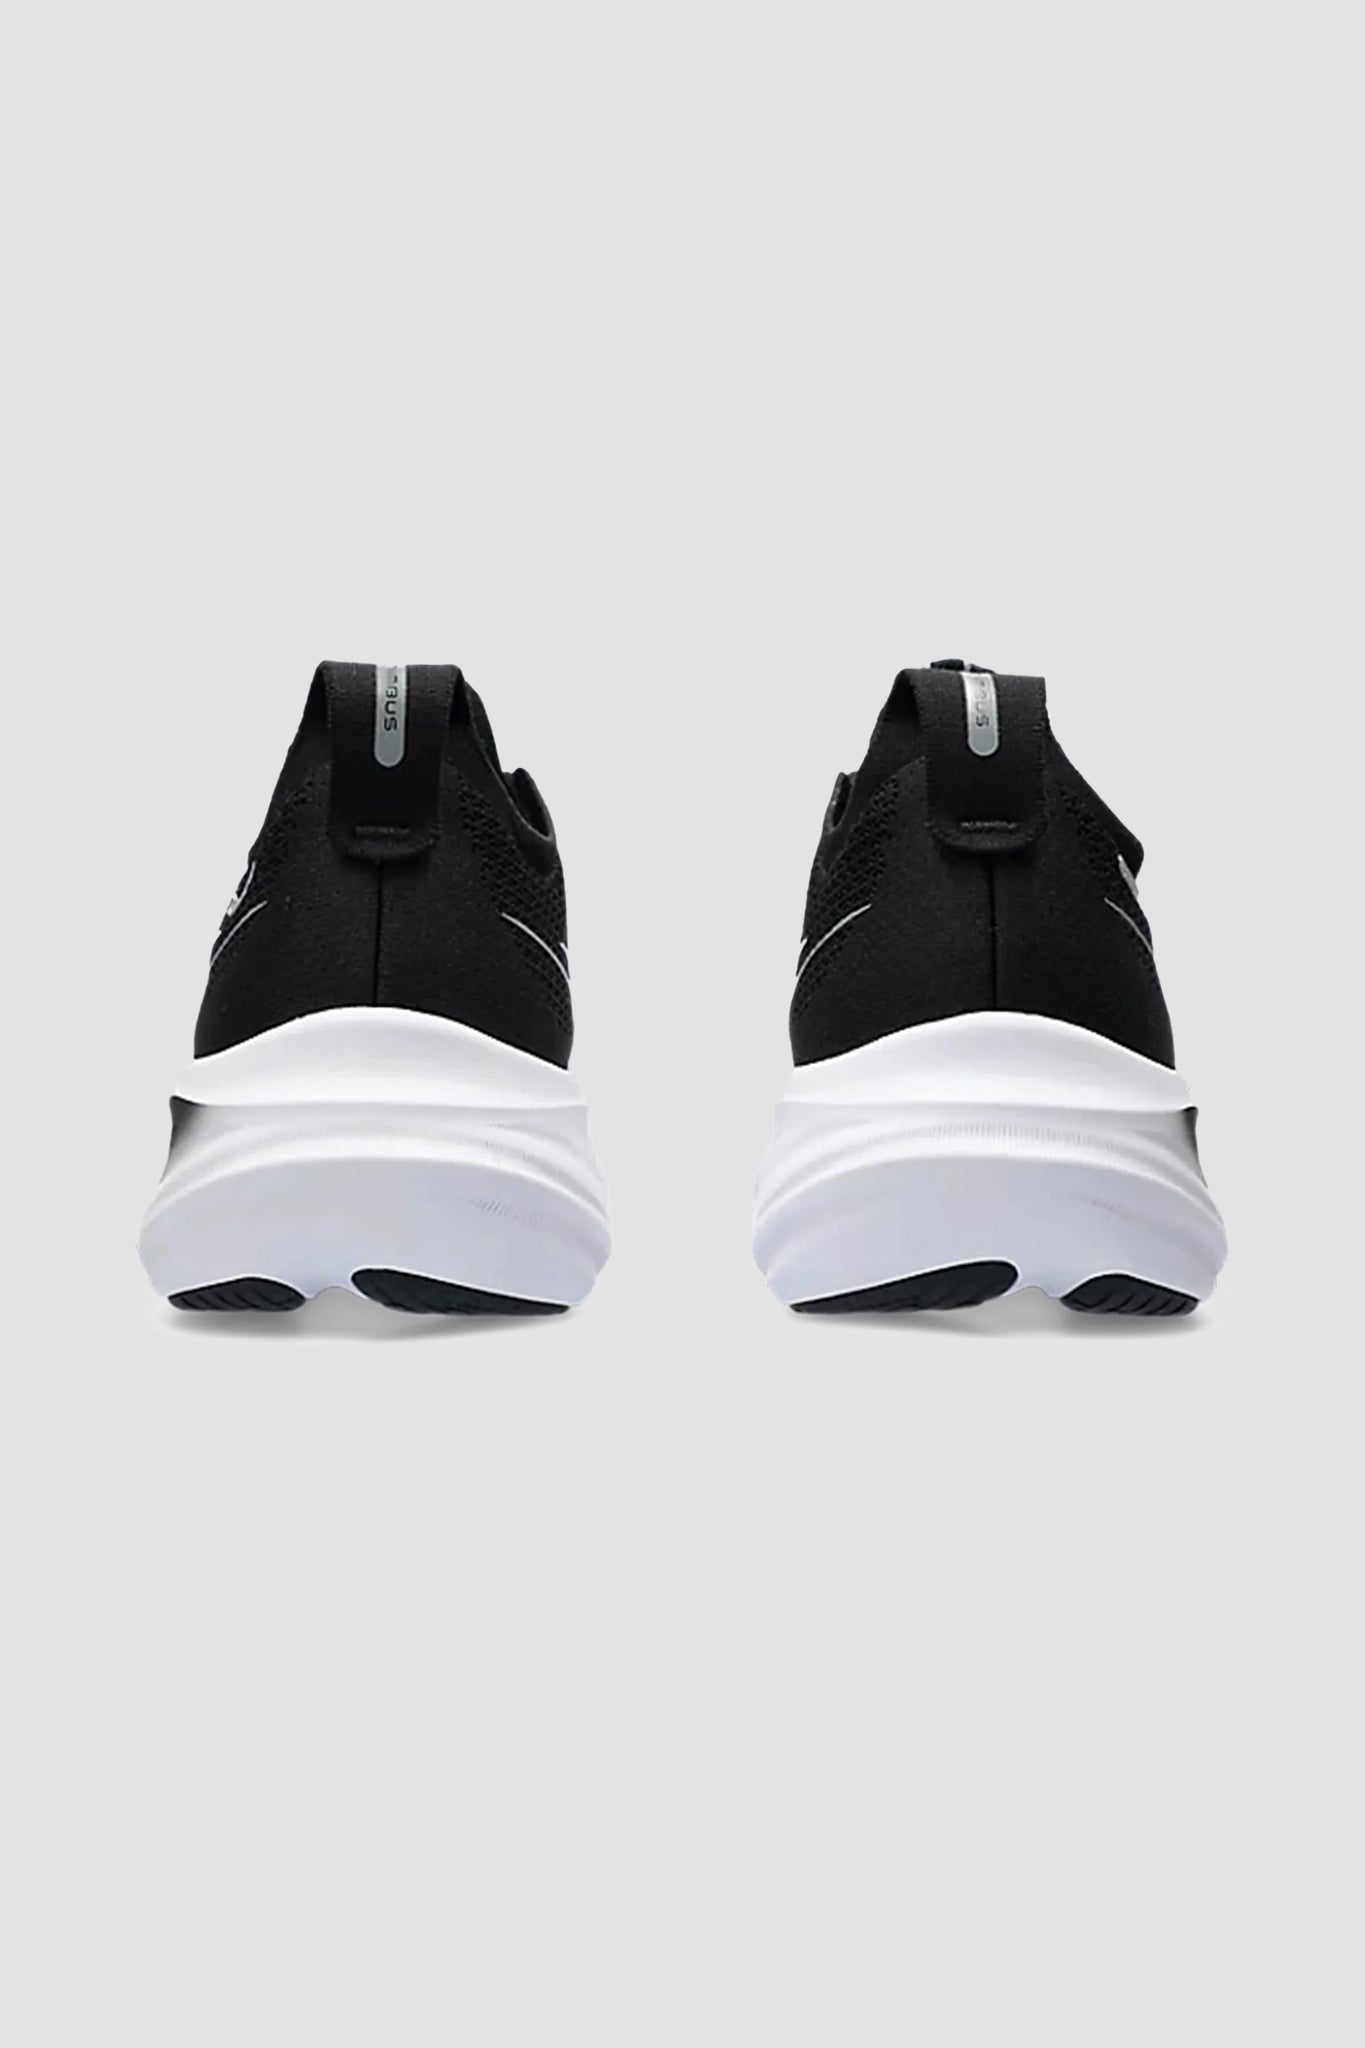 ASICS Men's Gel-Nimbus 26 Sneaker in Black/Graphite Grey